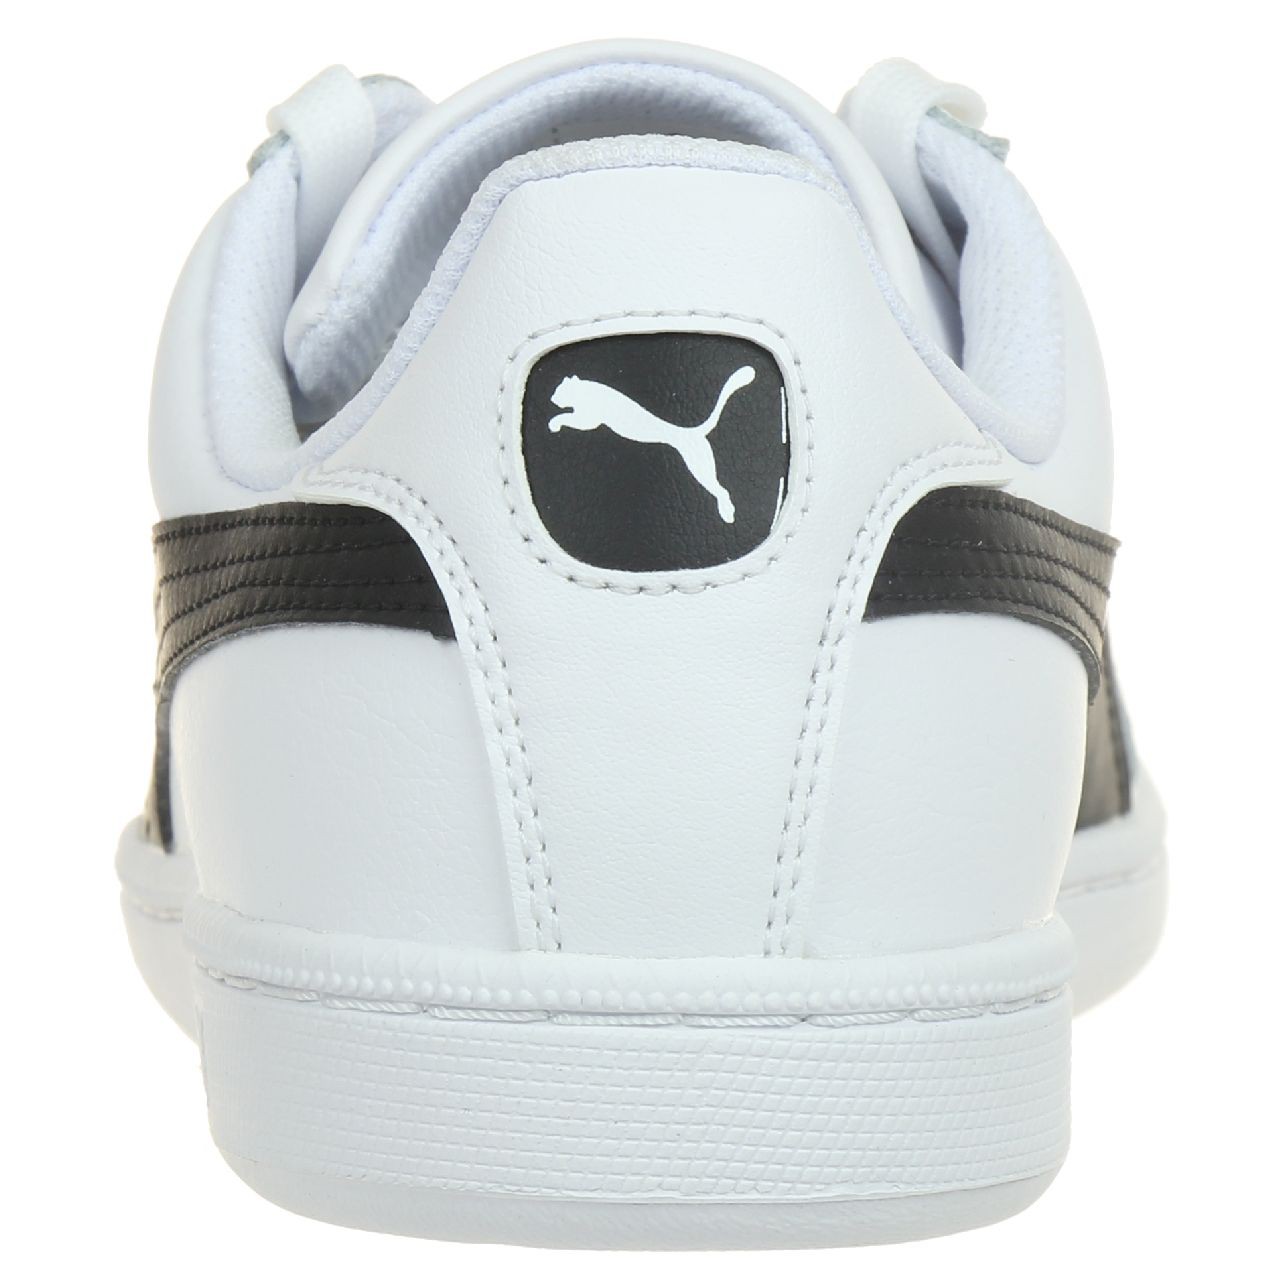 Puma Smash L Herren Sneaker Schuhe Leder weiß 356722 11